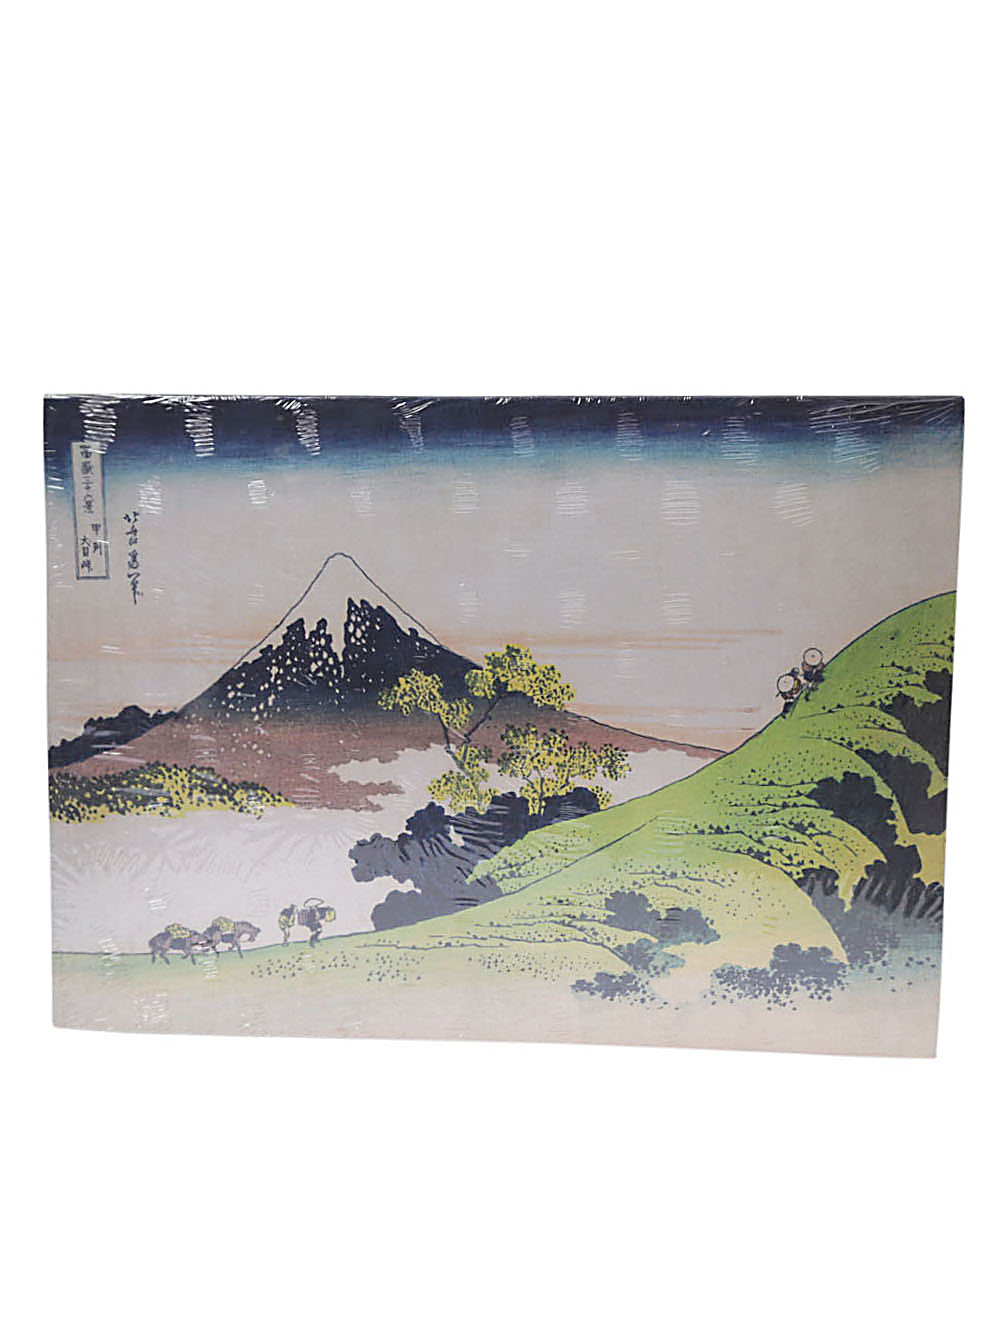 Taschen TASCHEN- Hokusai. Thirty-six Views Of Mount Fuji